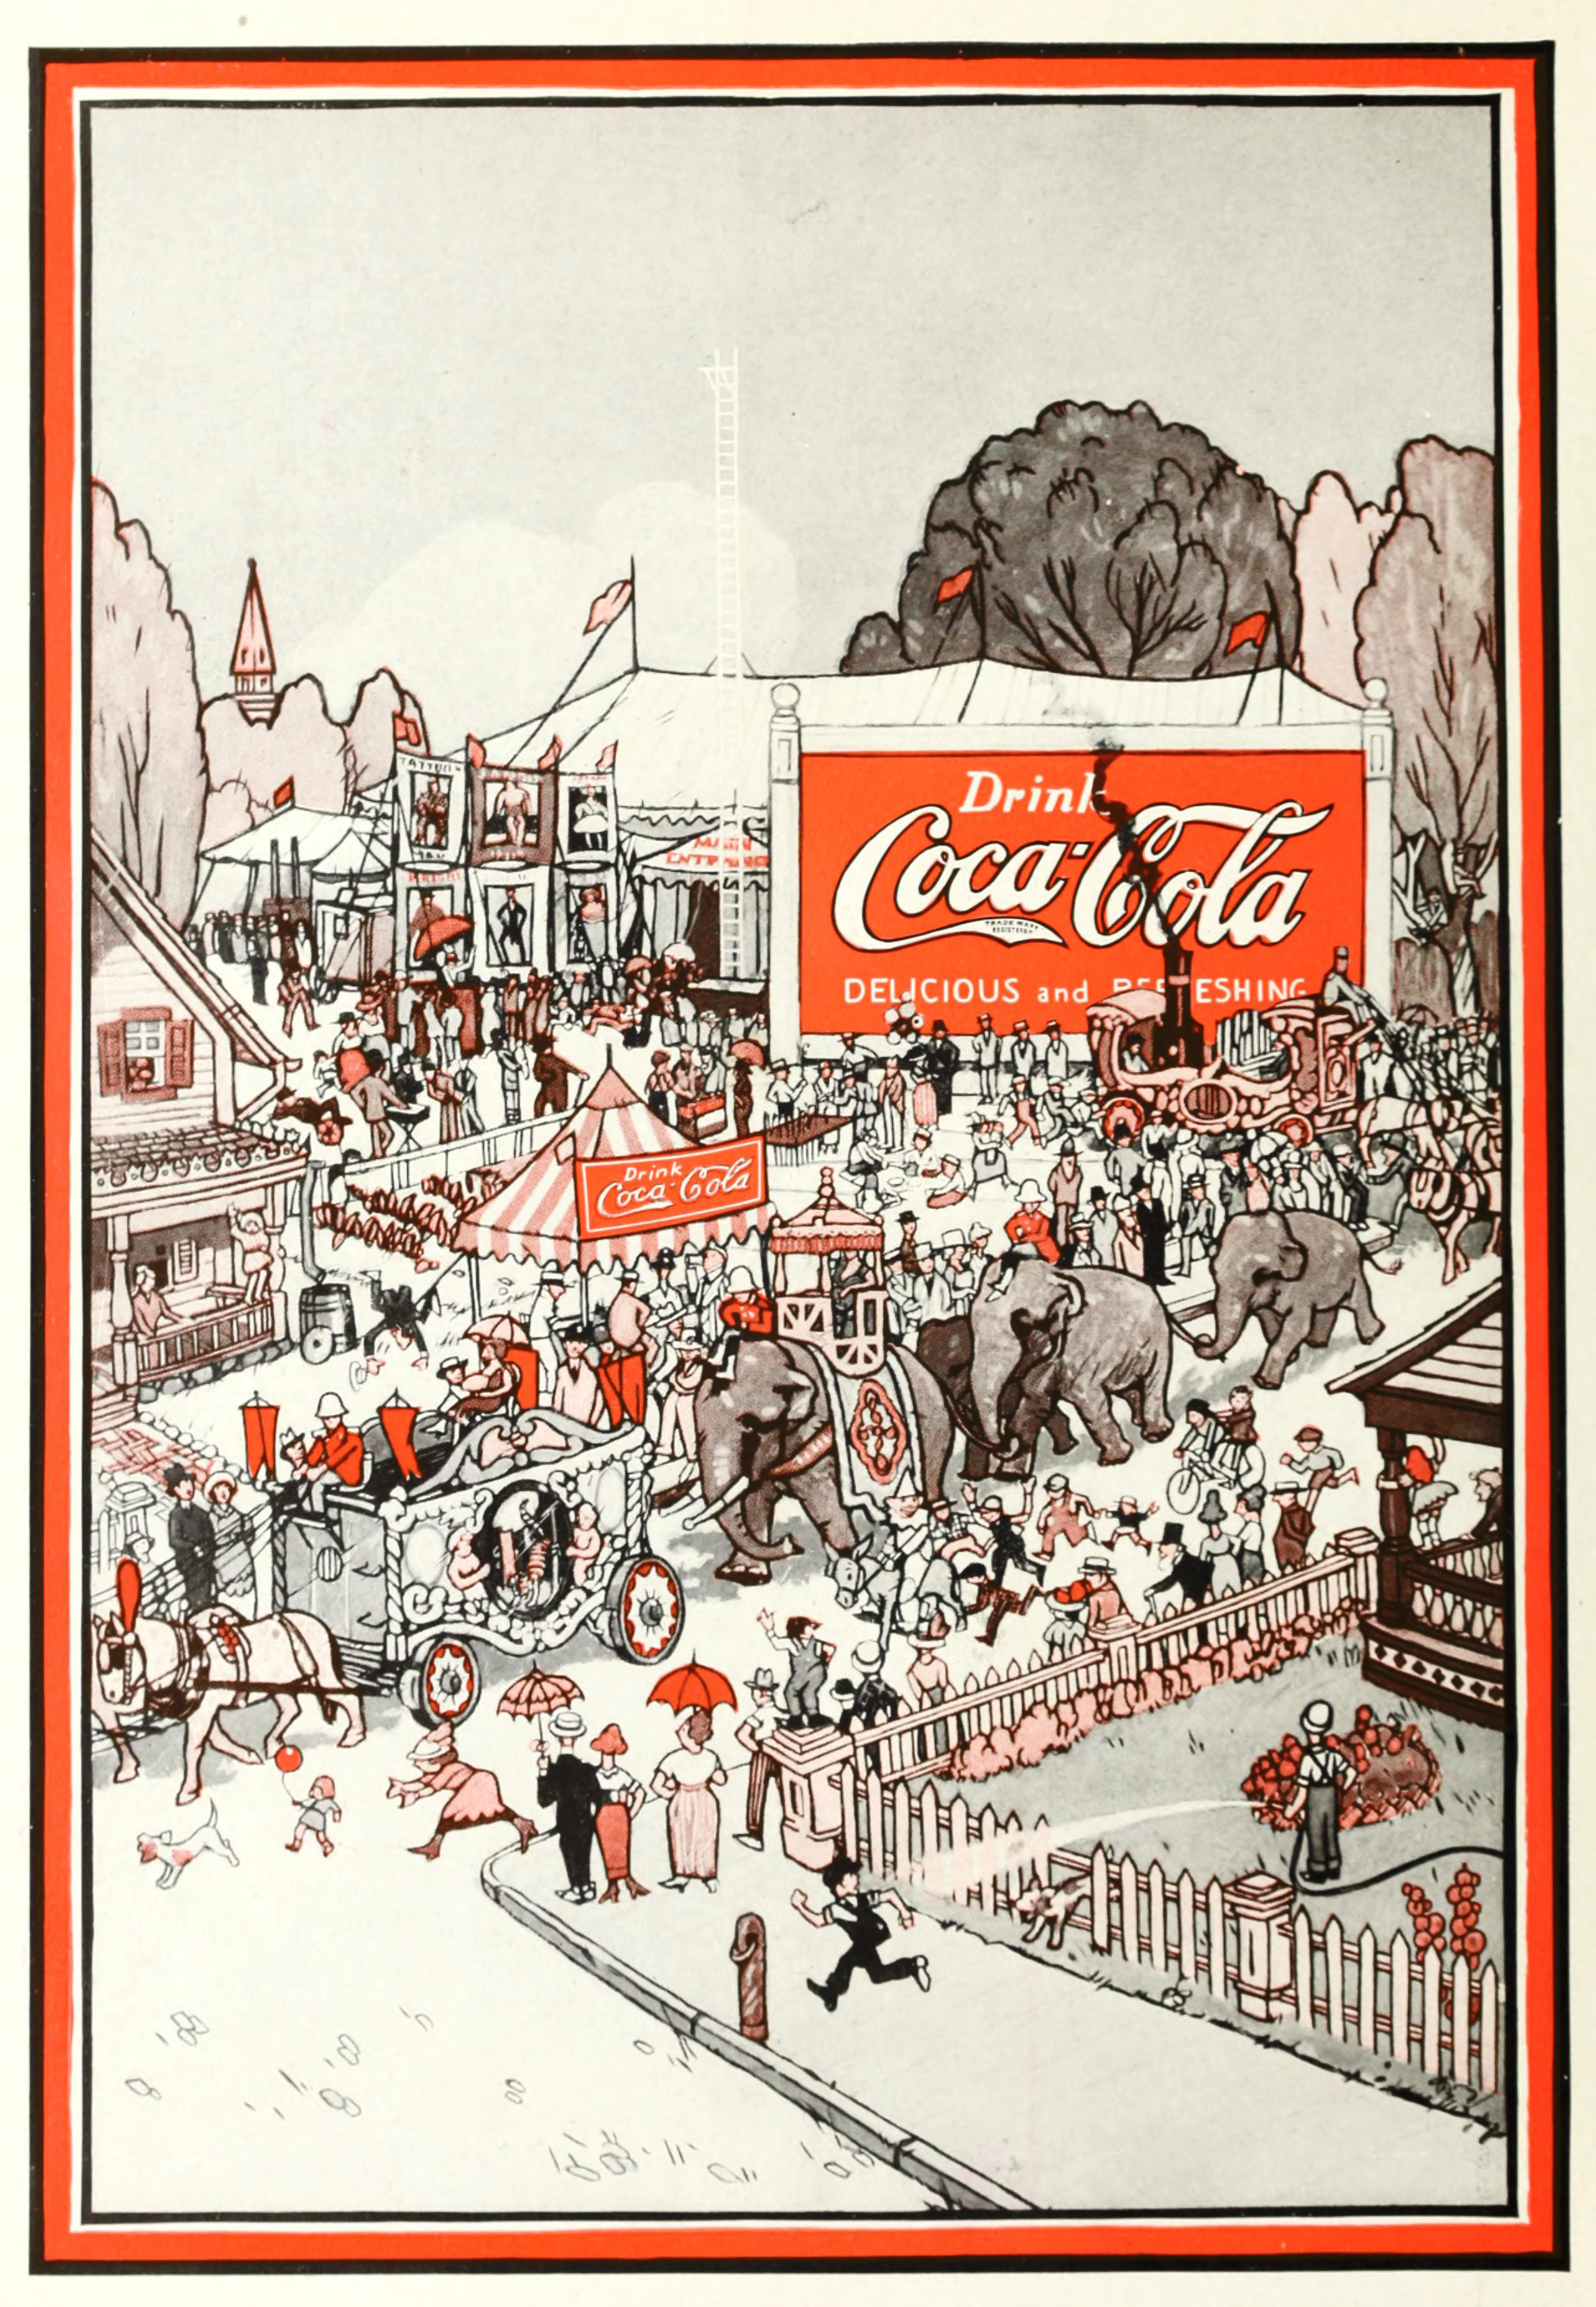 1920s advertisements coca cola